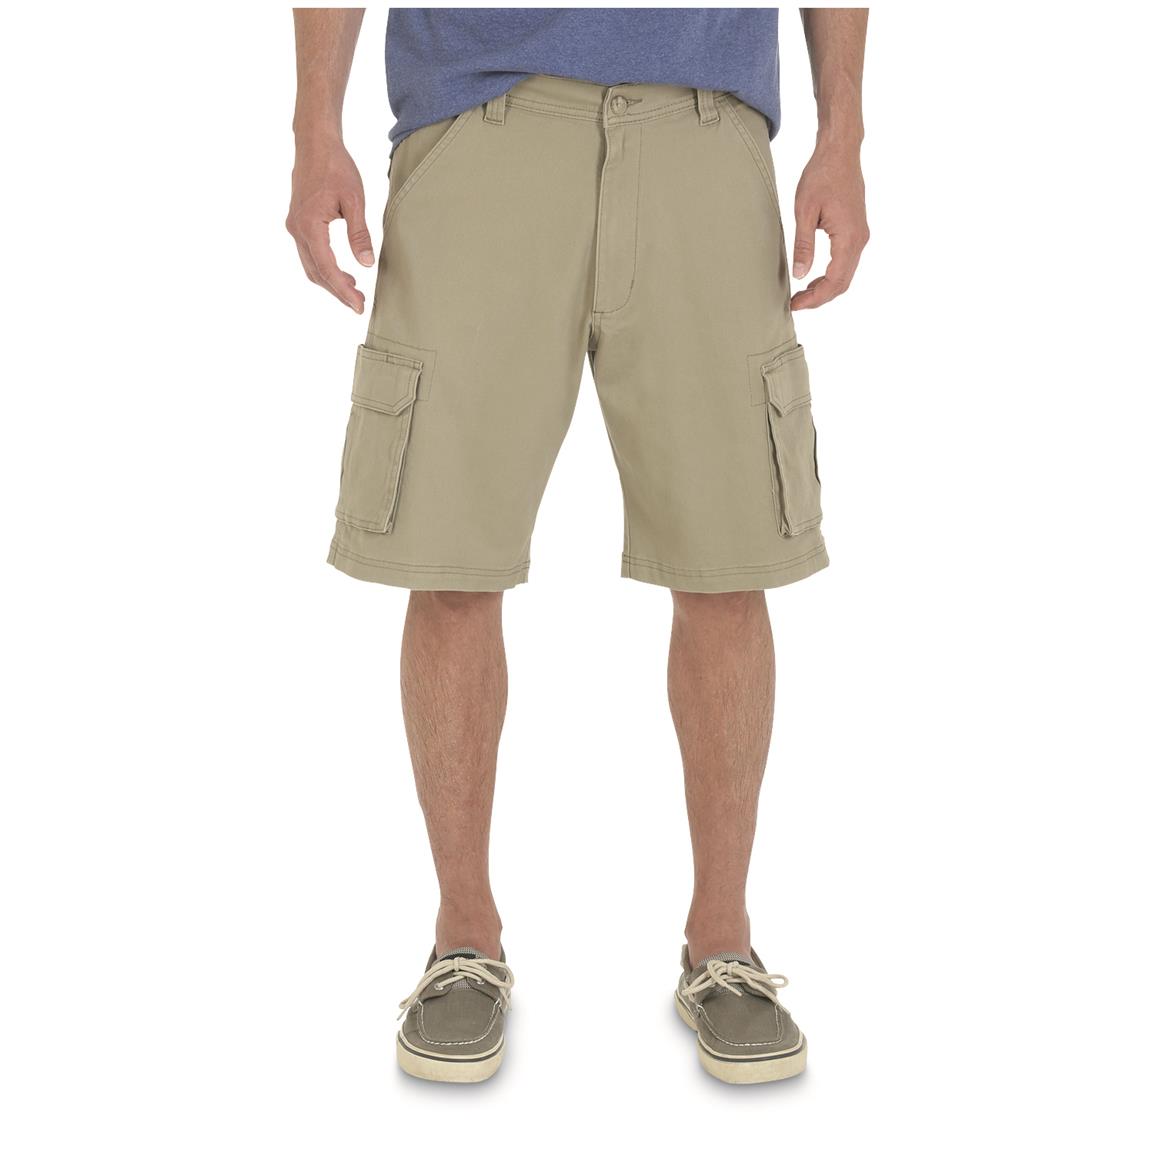 Wrangler Men's Tampa Cargo Shorts - 676413, Shorts at Sportsman's Guide